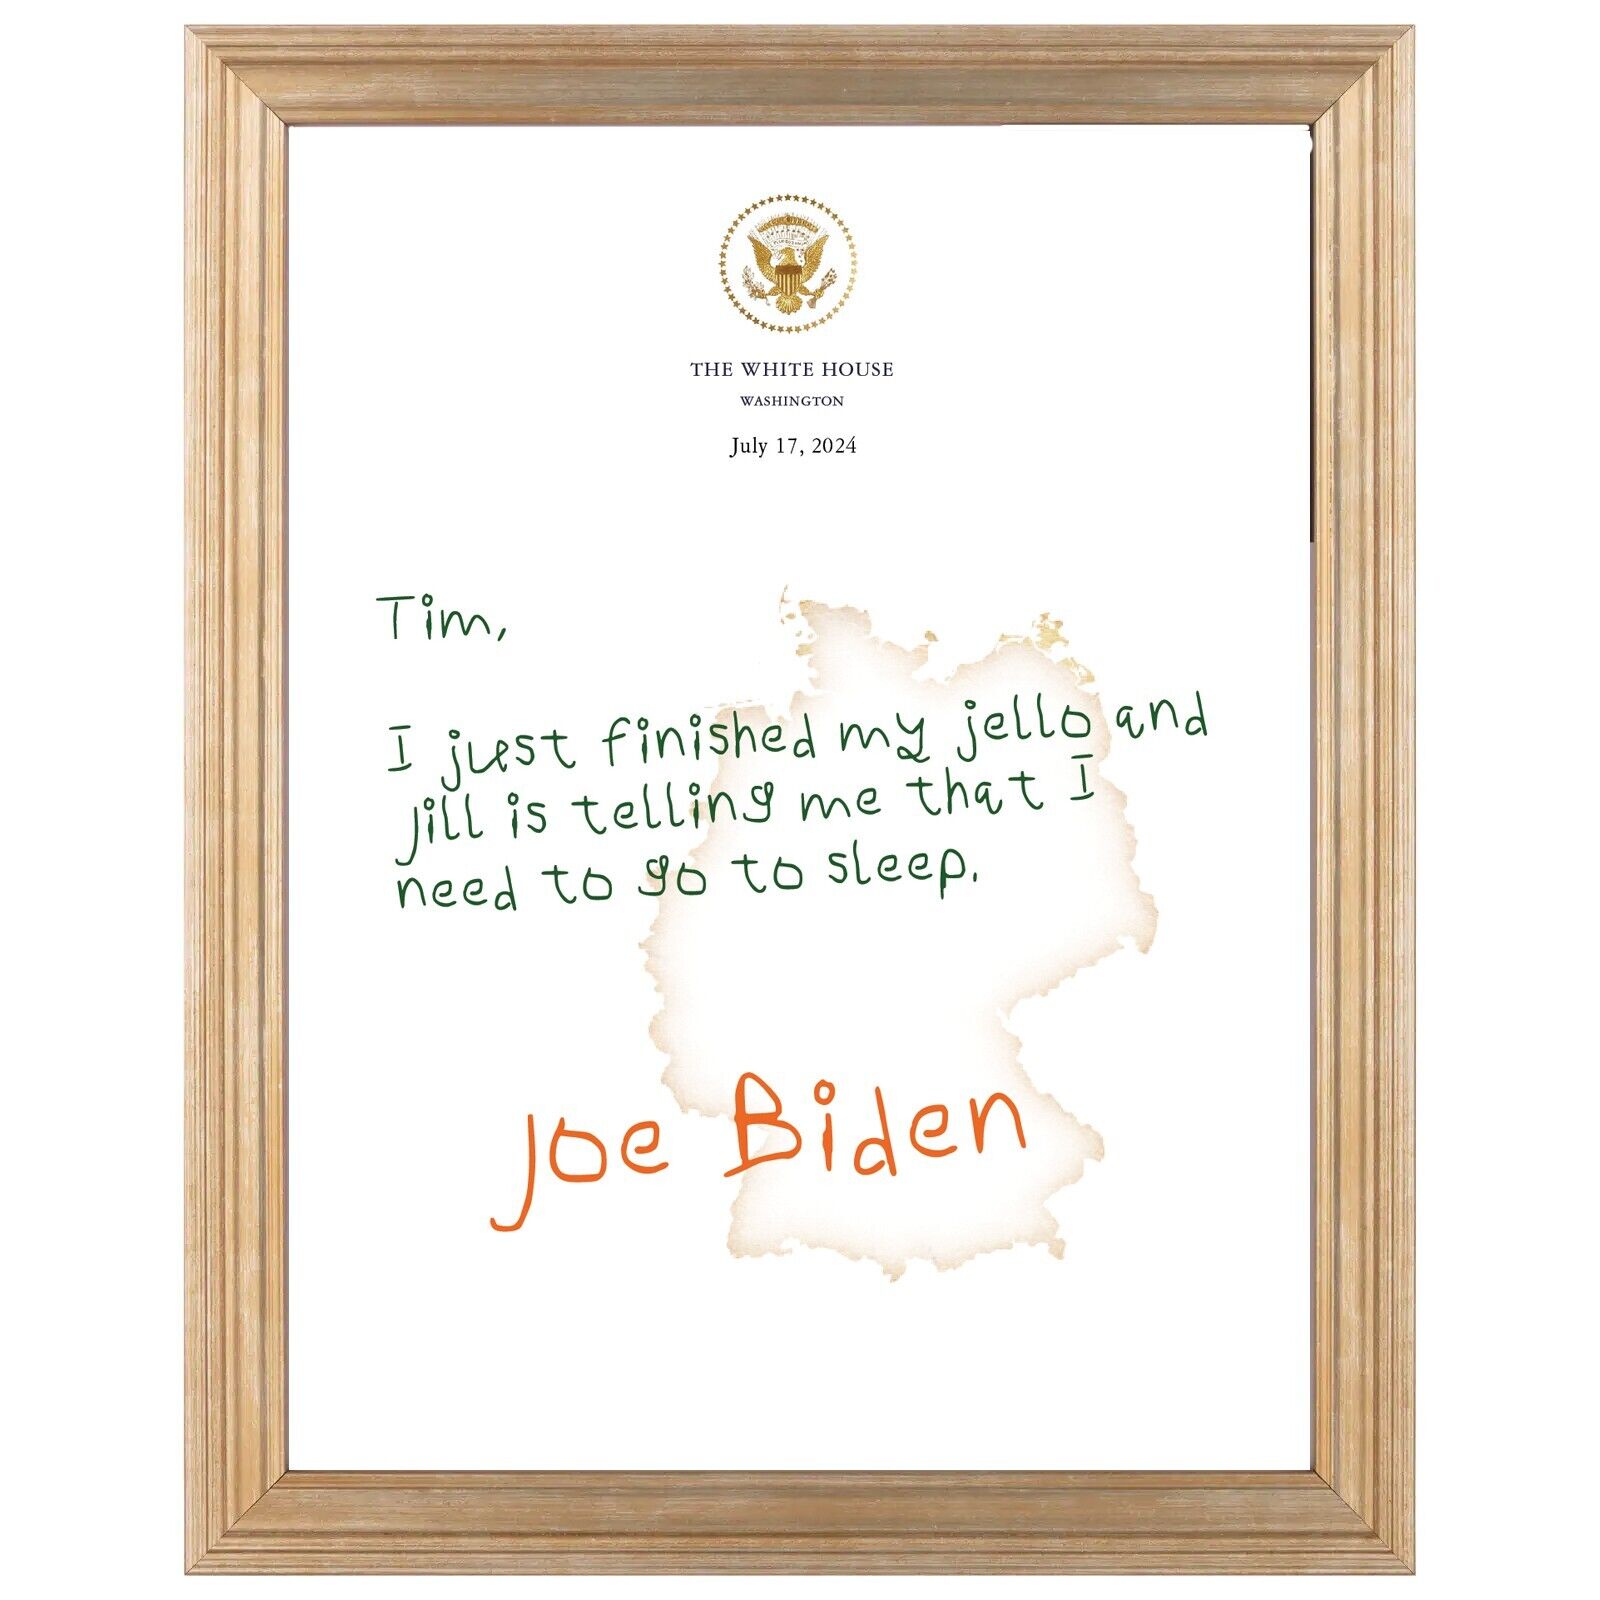 FUNNY SIGNED Joe Biden Personalized Presidential White House Letter